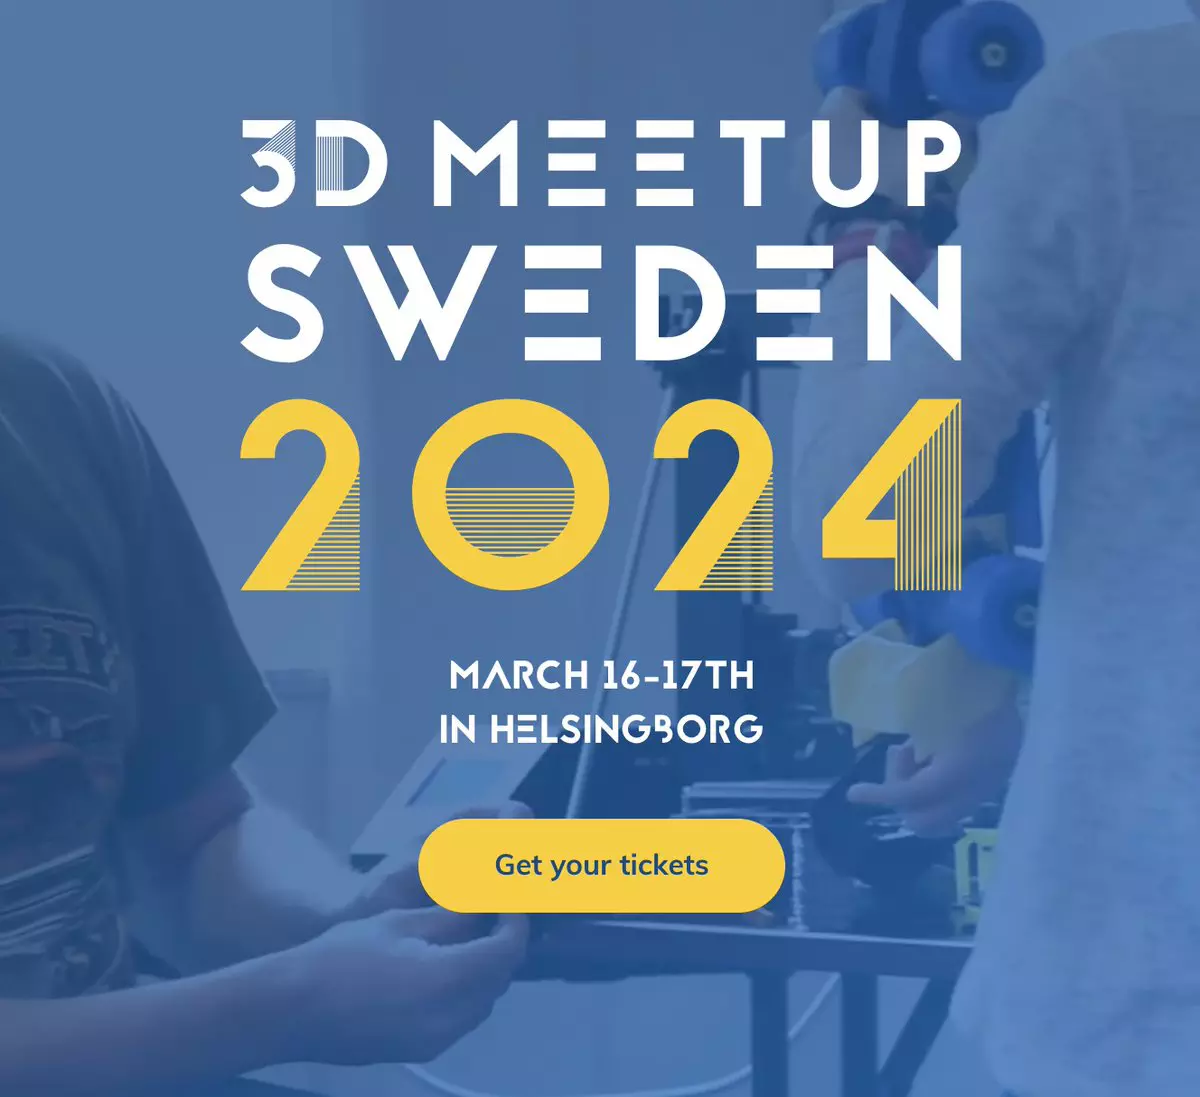 Stemfie3D at 3DmeetupSweden 2020